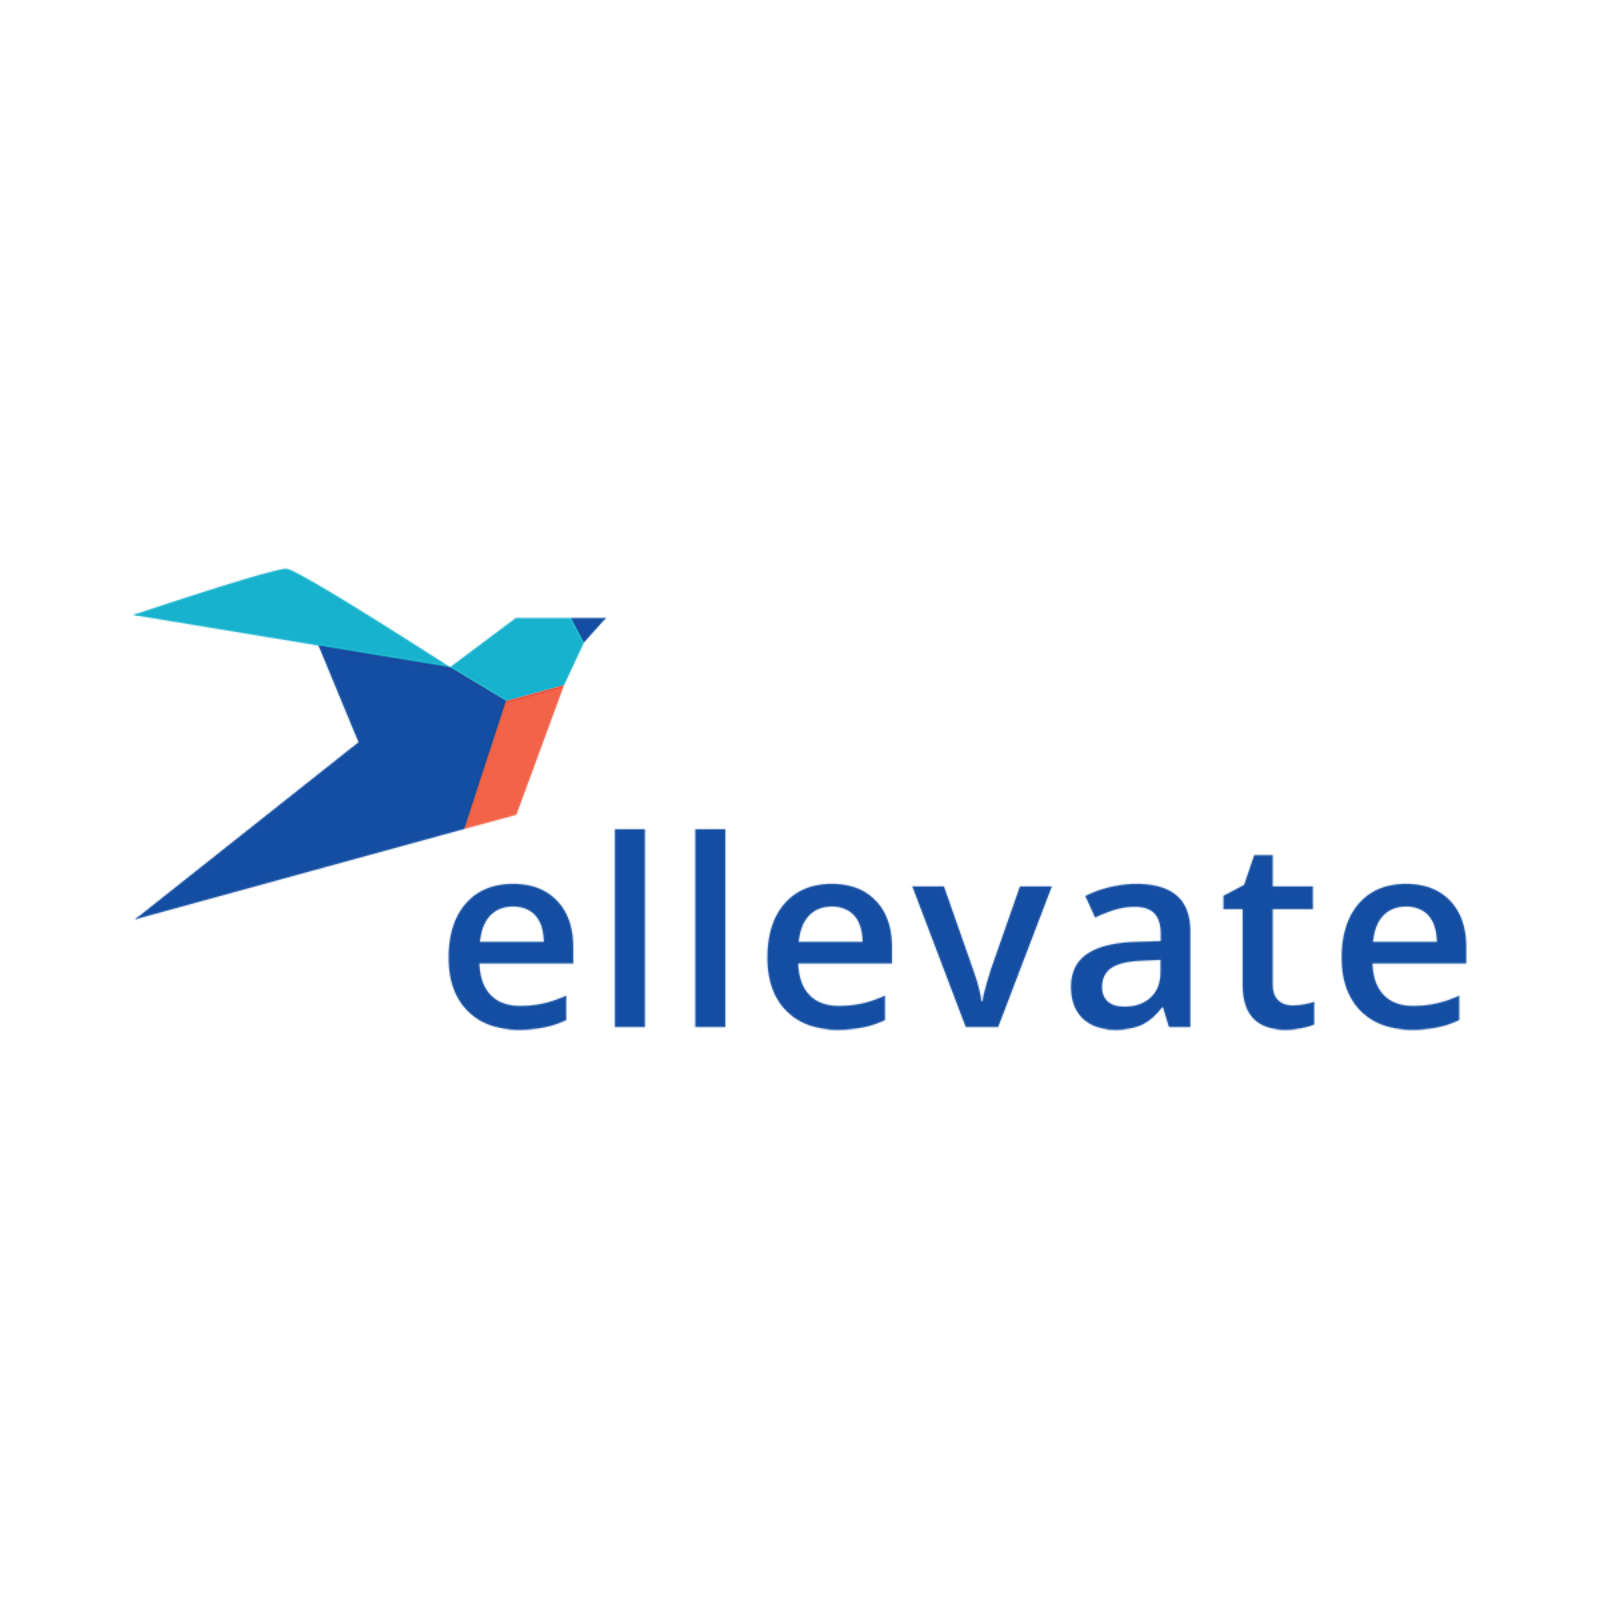 Women Organizations in New York New York - Ellevate Network